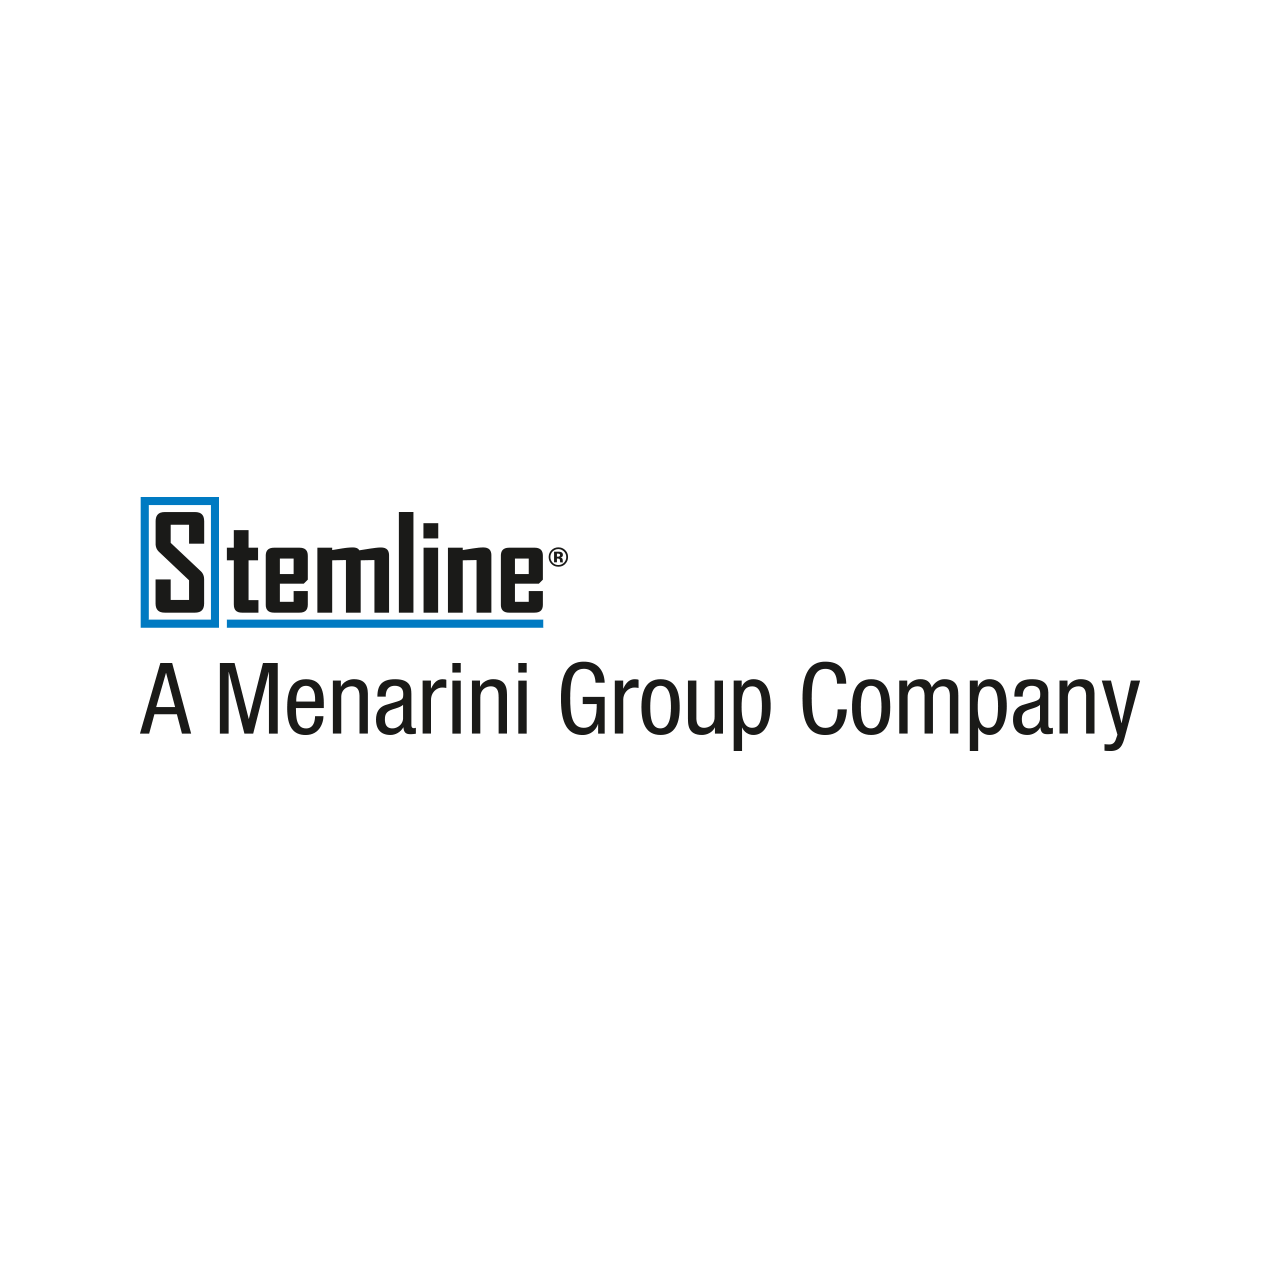 logo cmc sponsor 05 premium logo stemline menarini group